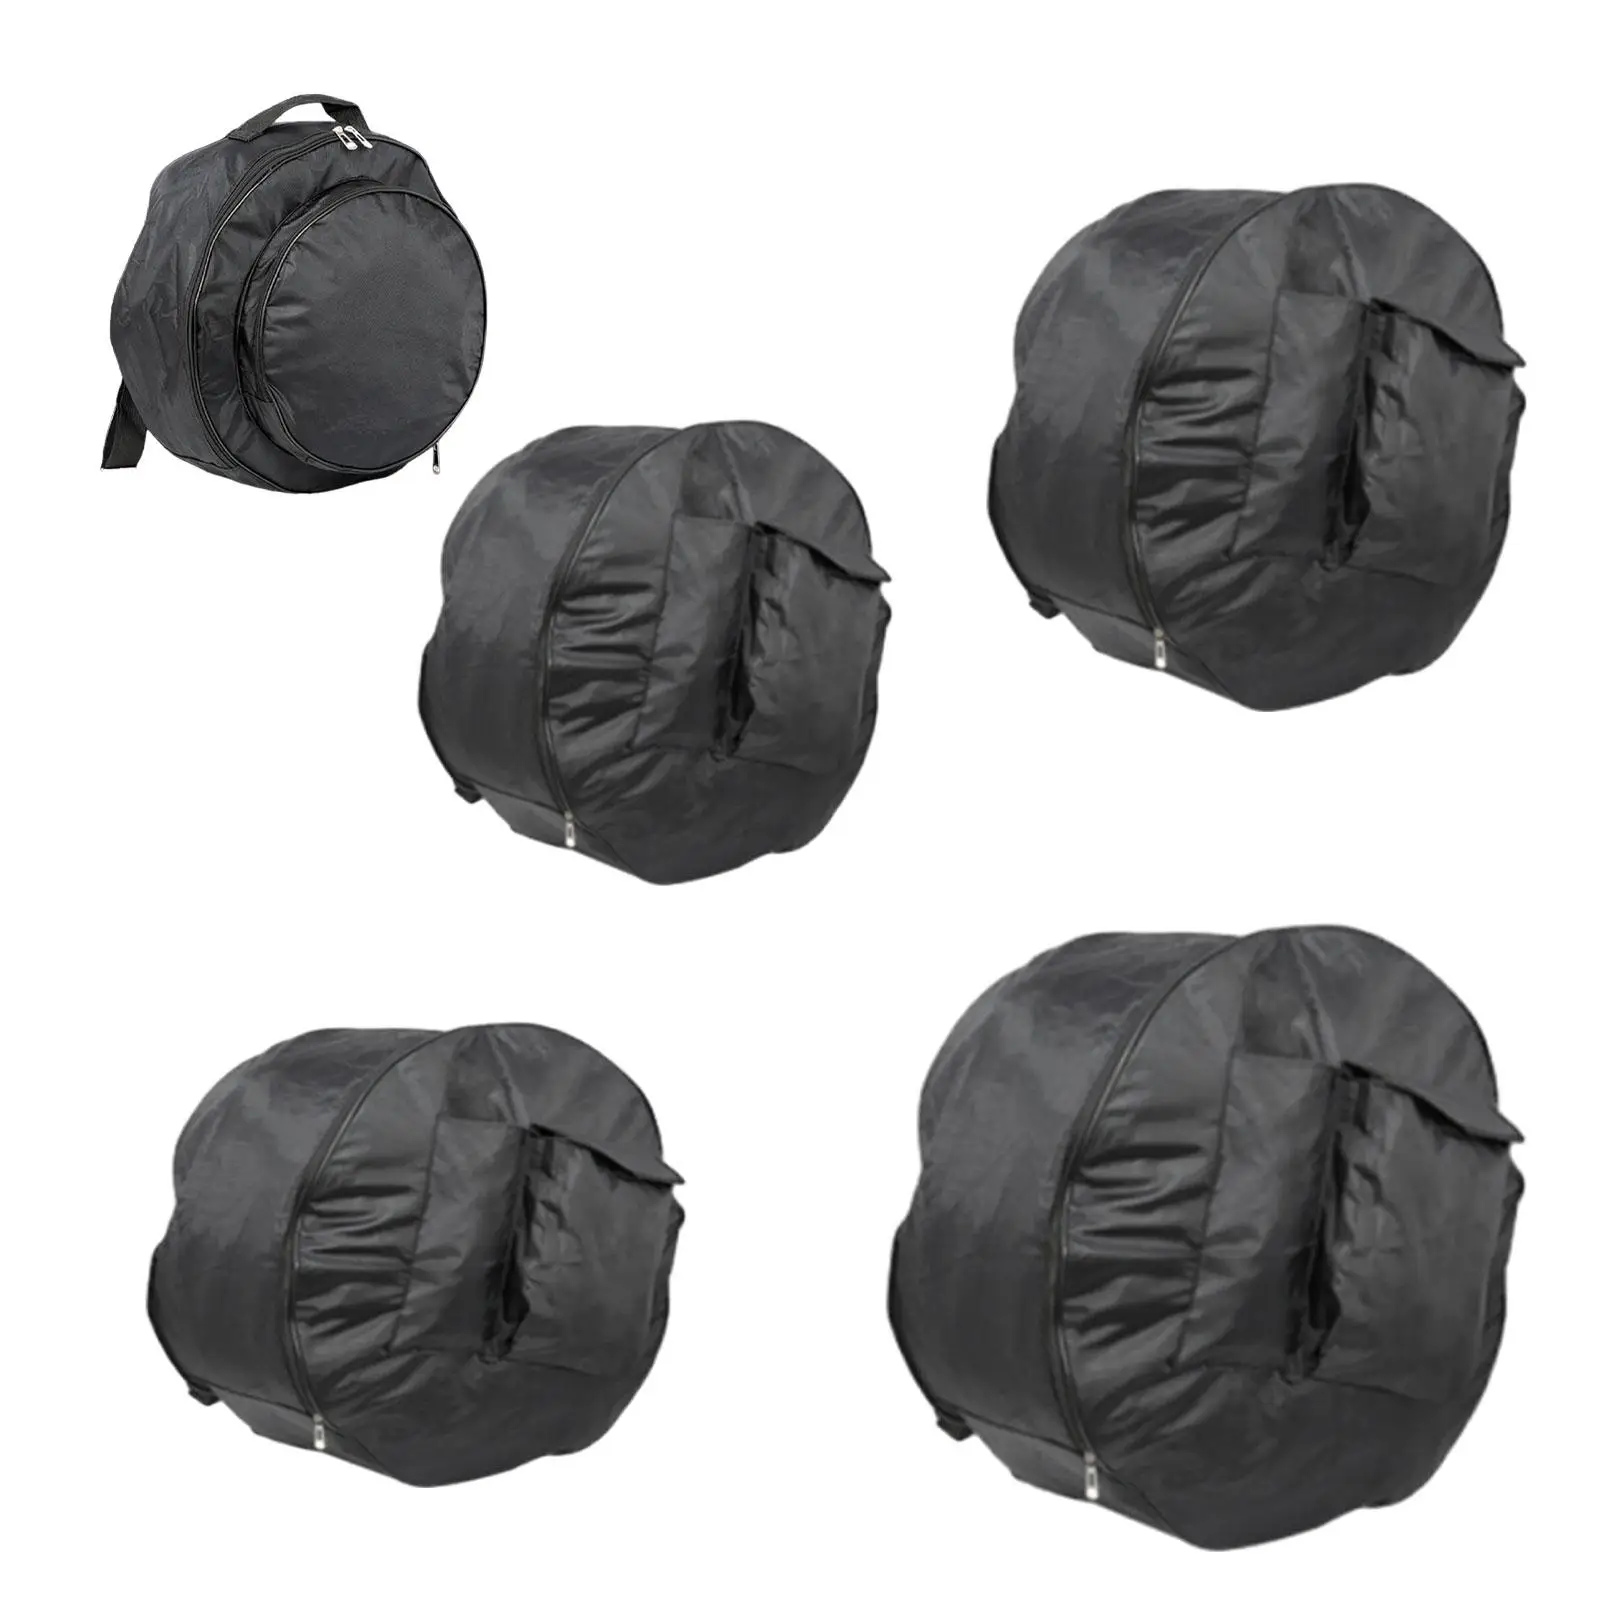 Snare Drum Bag Dustproof Oxford Cloth Carry Bag for Brackets Drum Pads